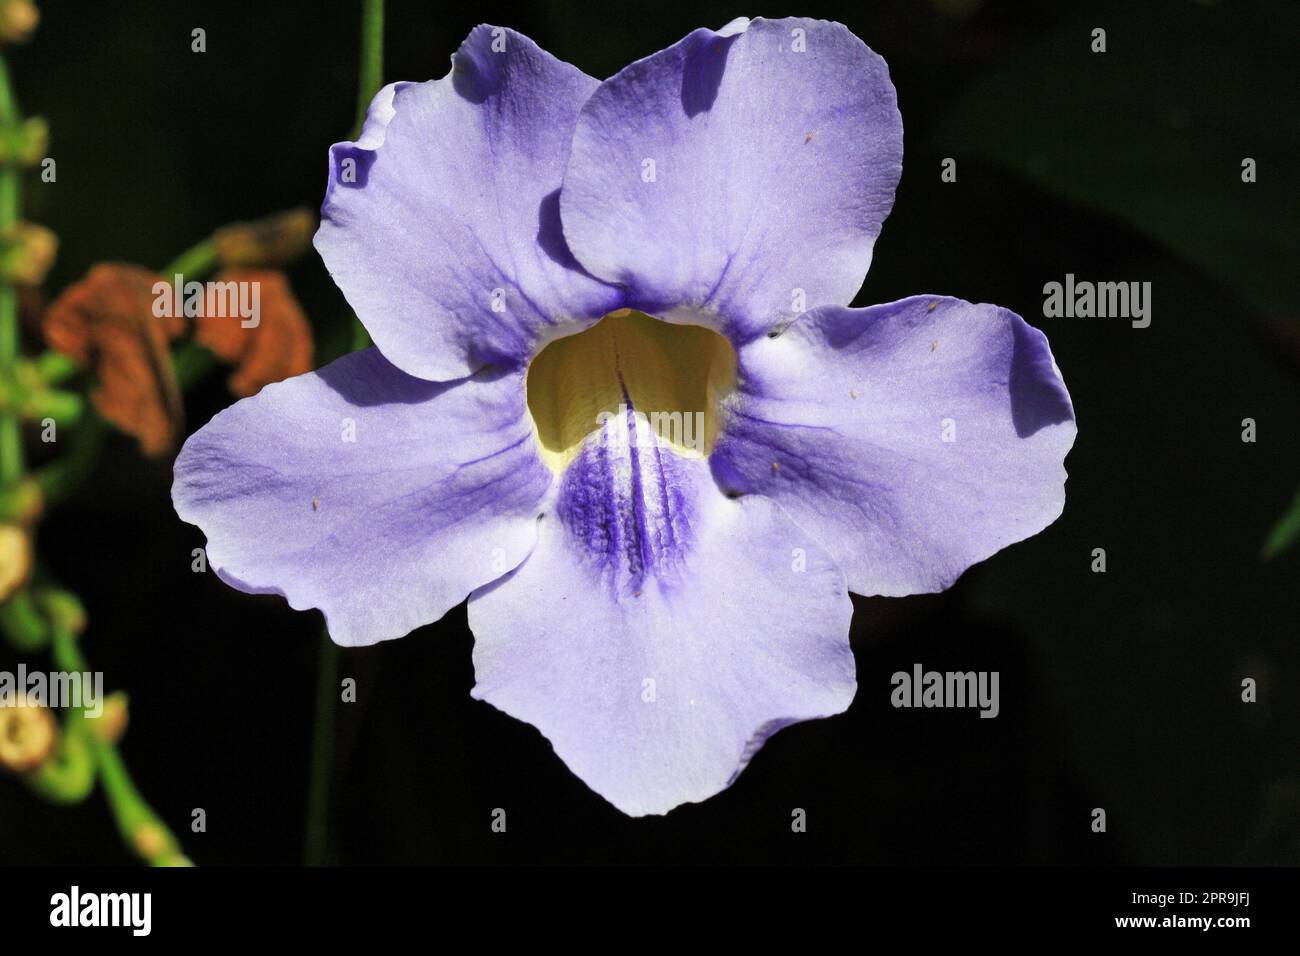 thunibergia grandiflora Stock Photo